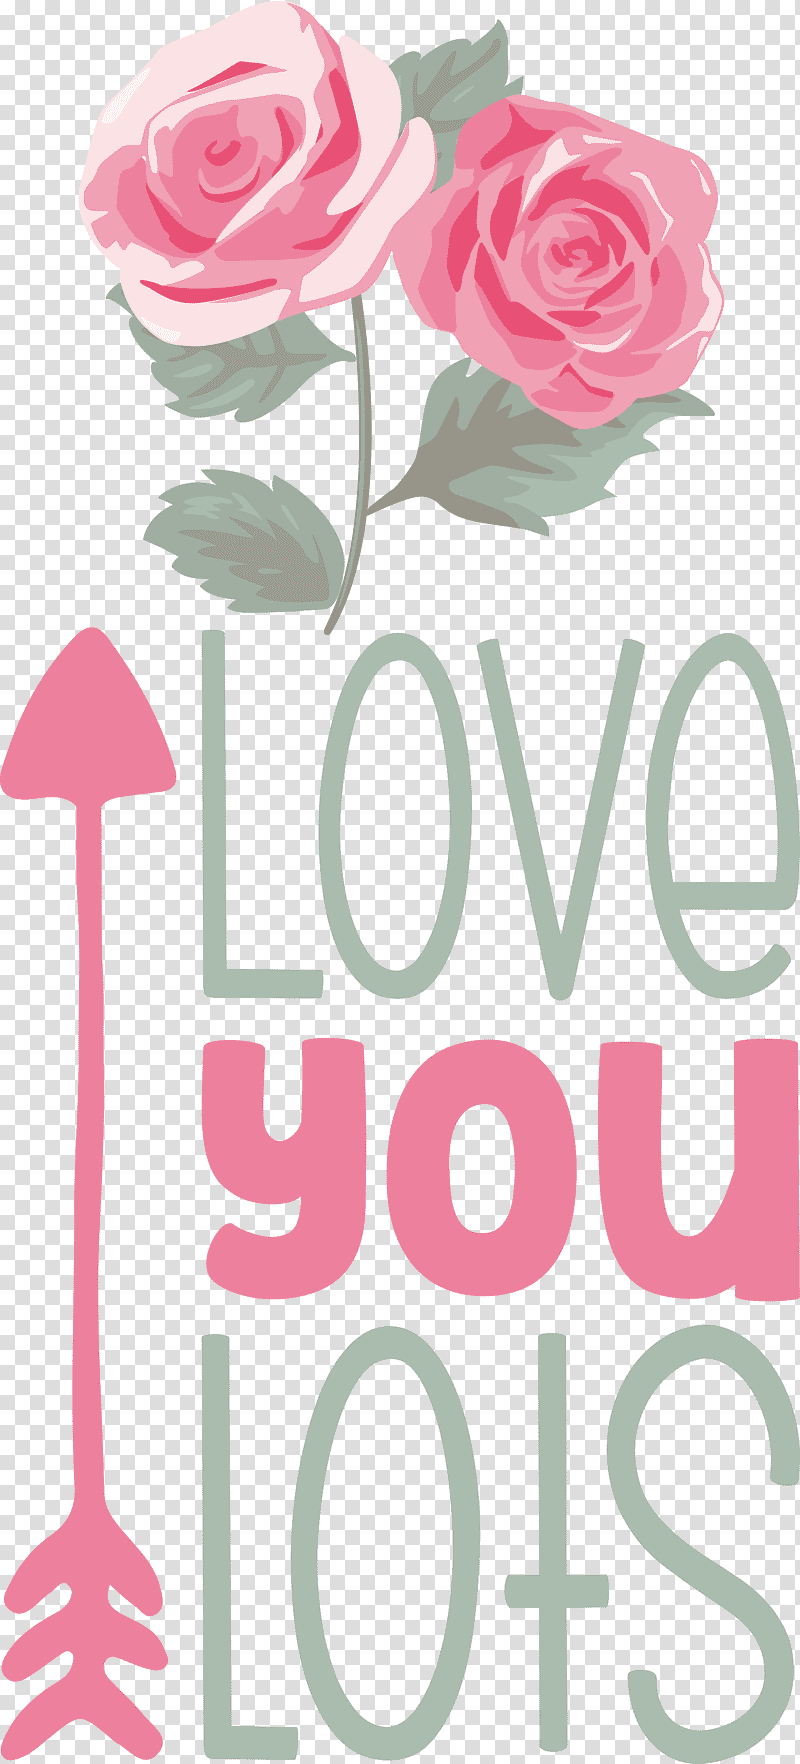 Love You Lots Valentines Day Valentine, Quote, Garden Roses, Flower Garden, Multiflora Rose, Flower Bouquet, Cut Flowers transparent background PNG clipart